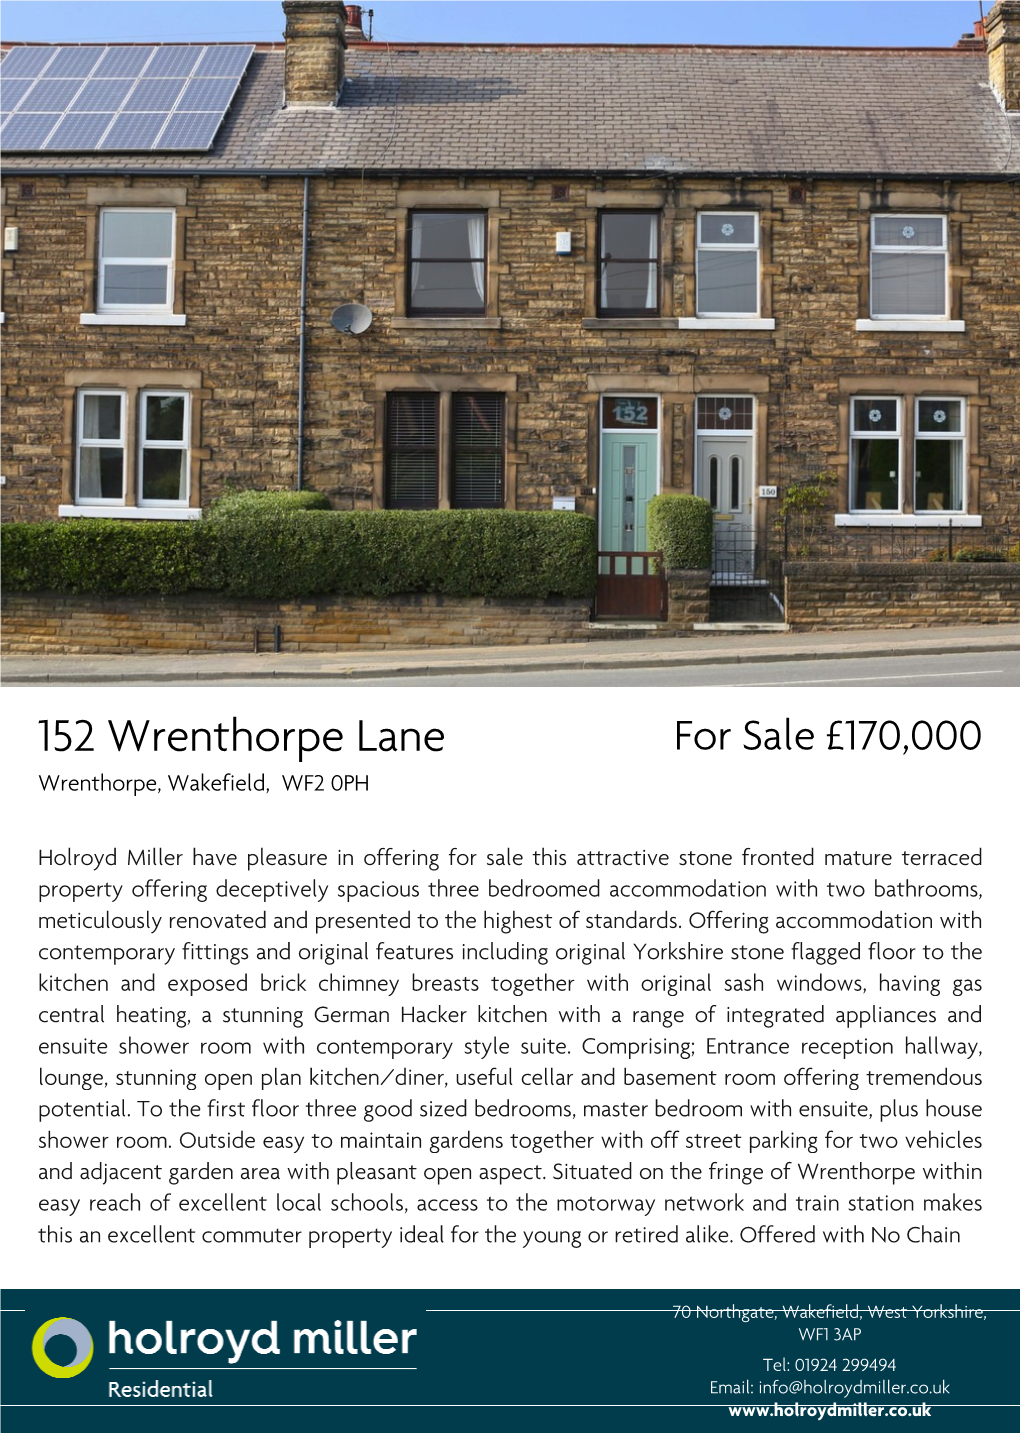 152 Wrenthorpe Lane for Sale £170,00 0 Wrenthorpe, Wakefield, WF2 0PH